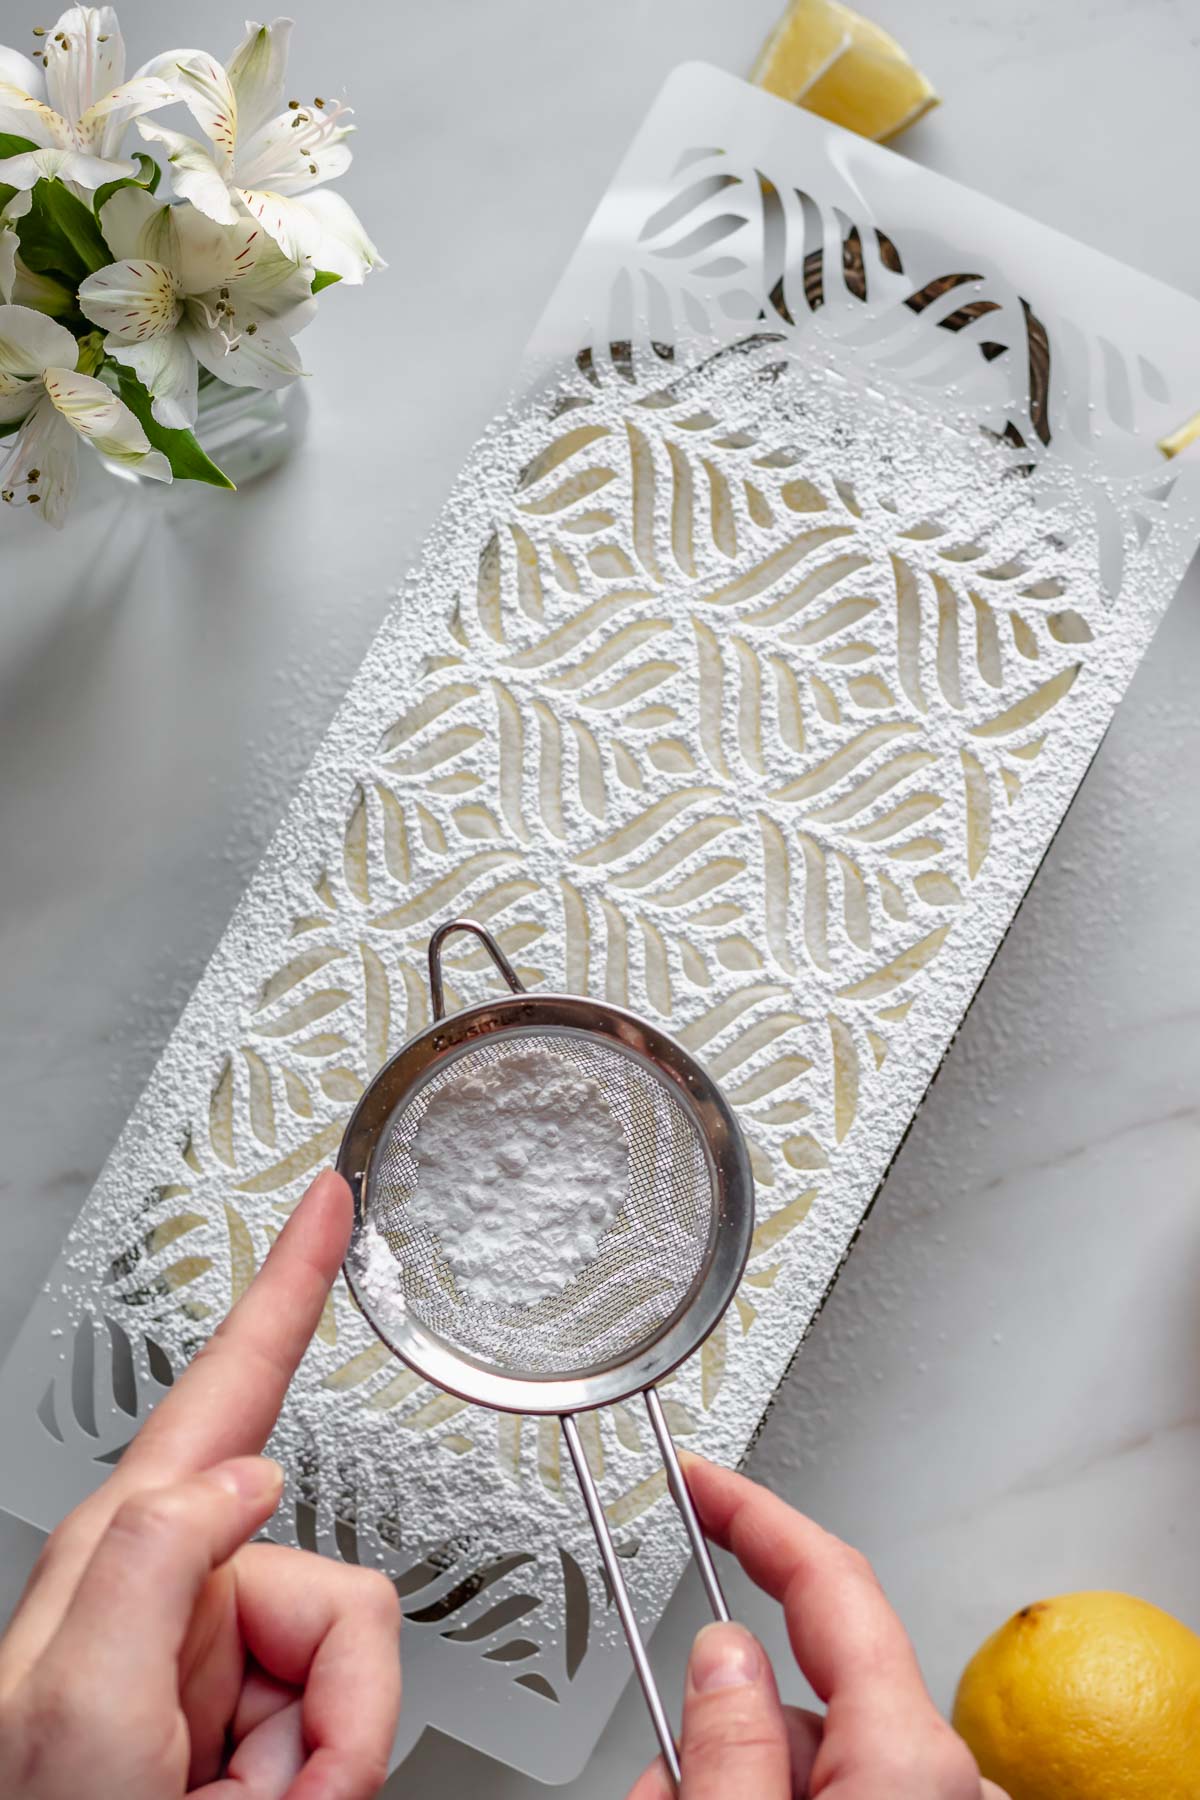 Powdered sugar being dusted on a stencil.